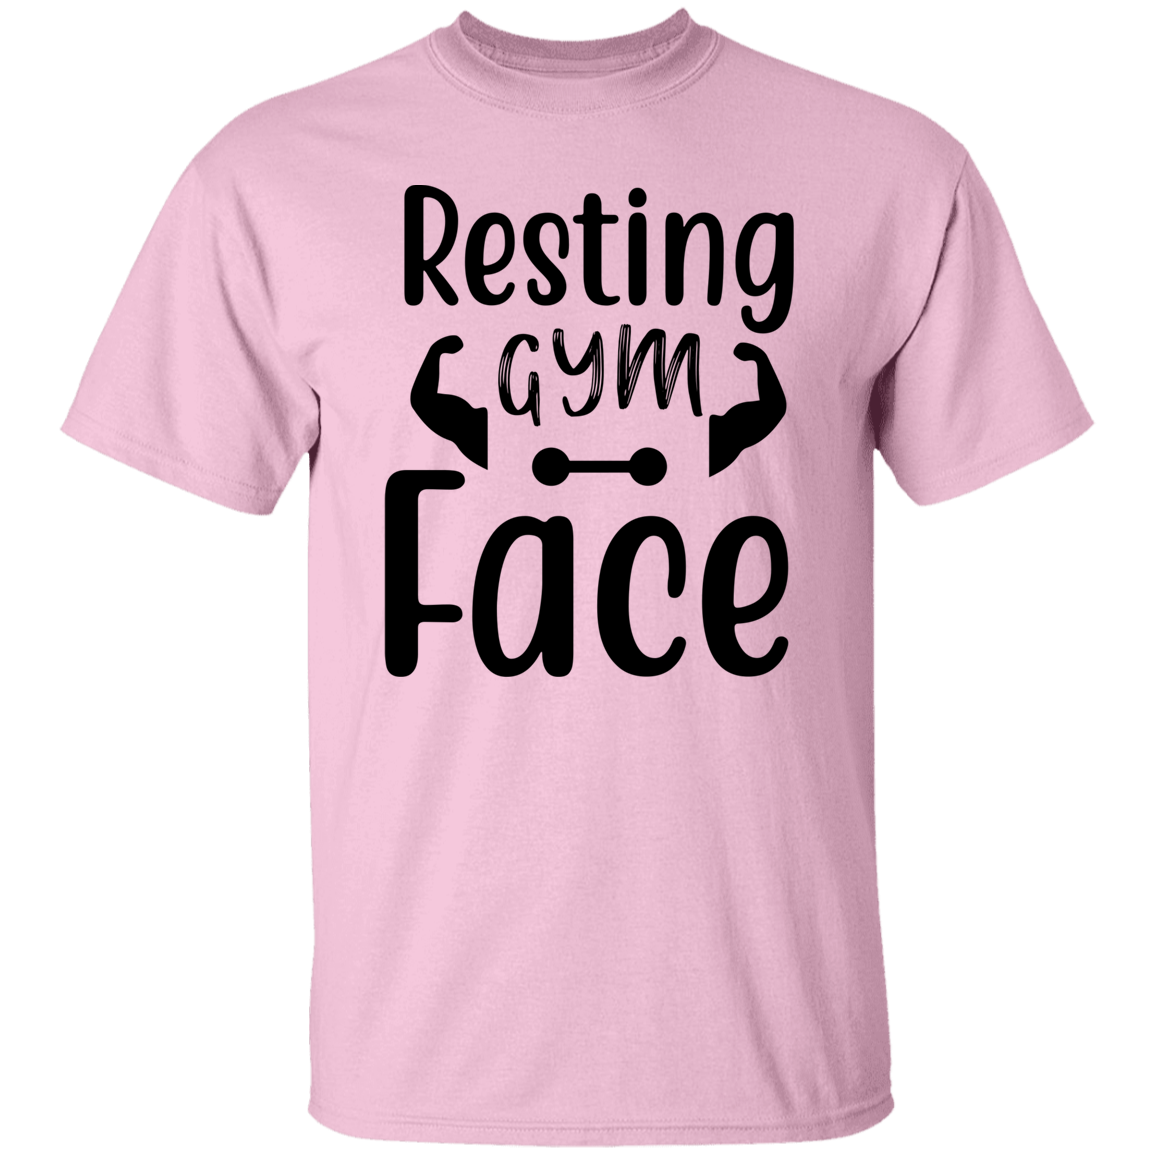 Resting T-Shirt